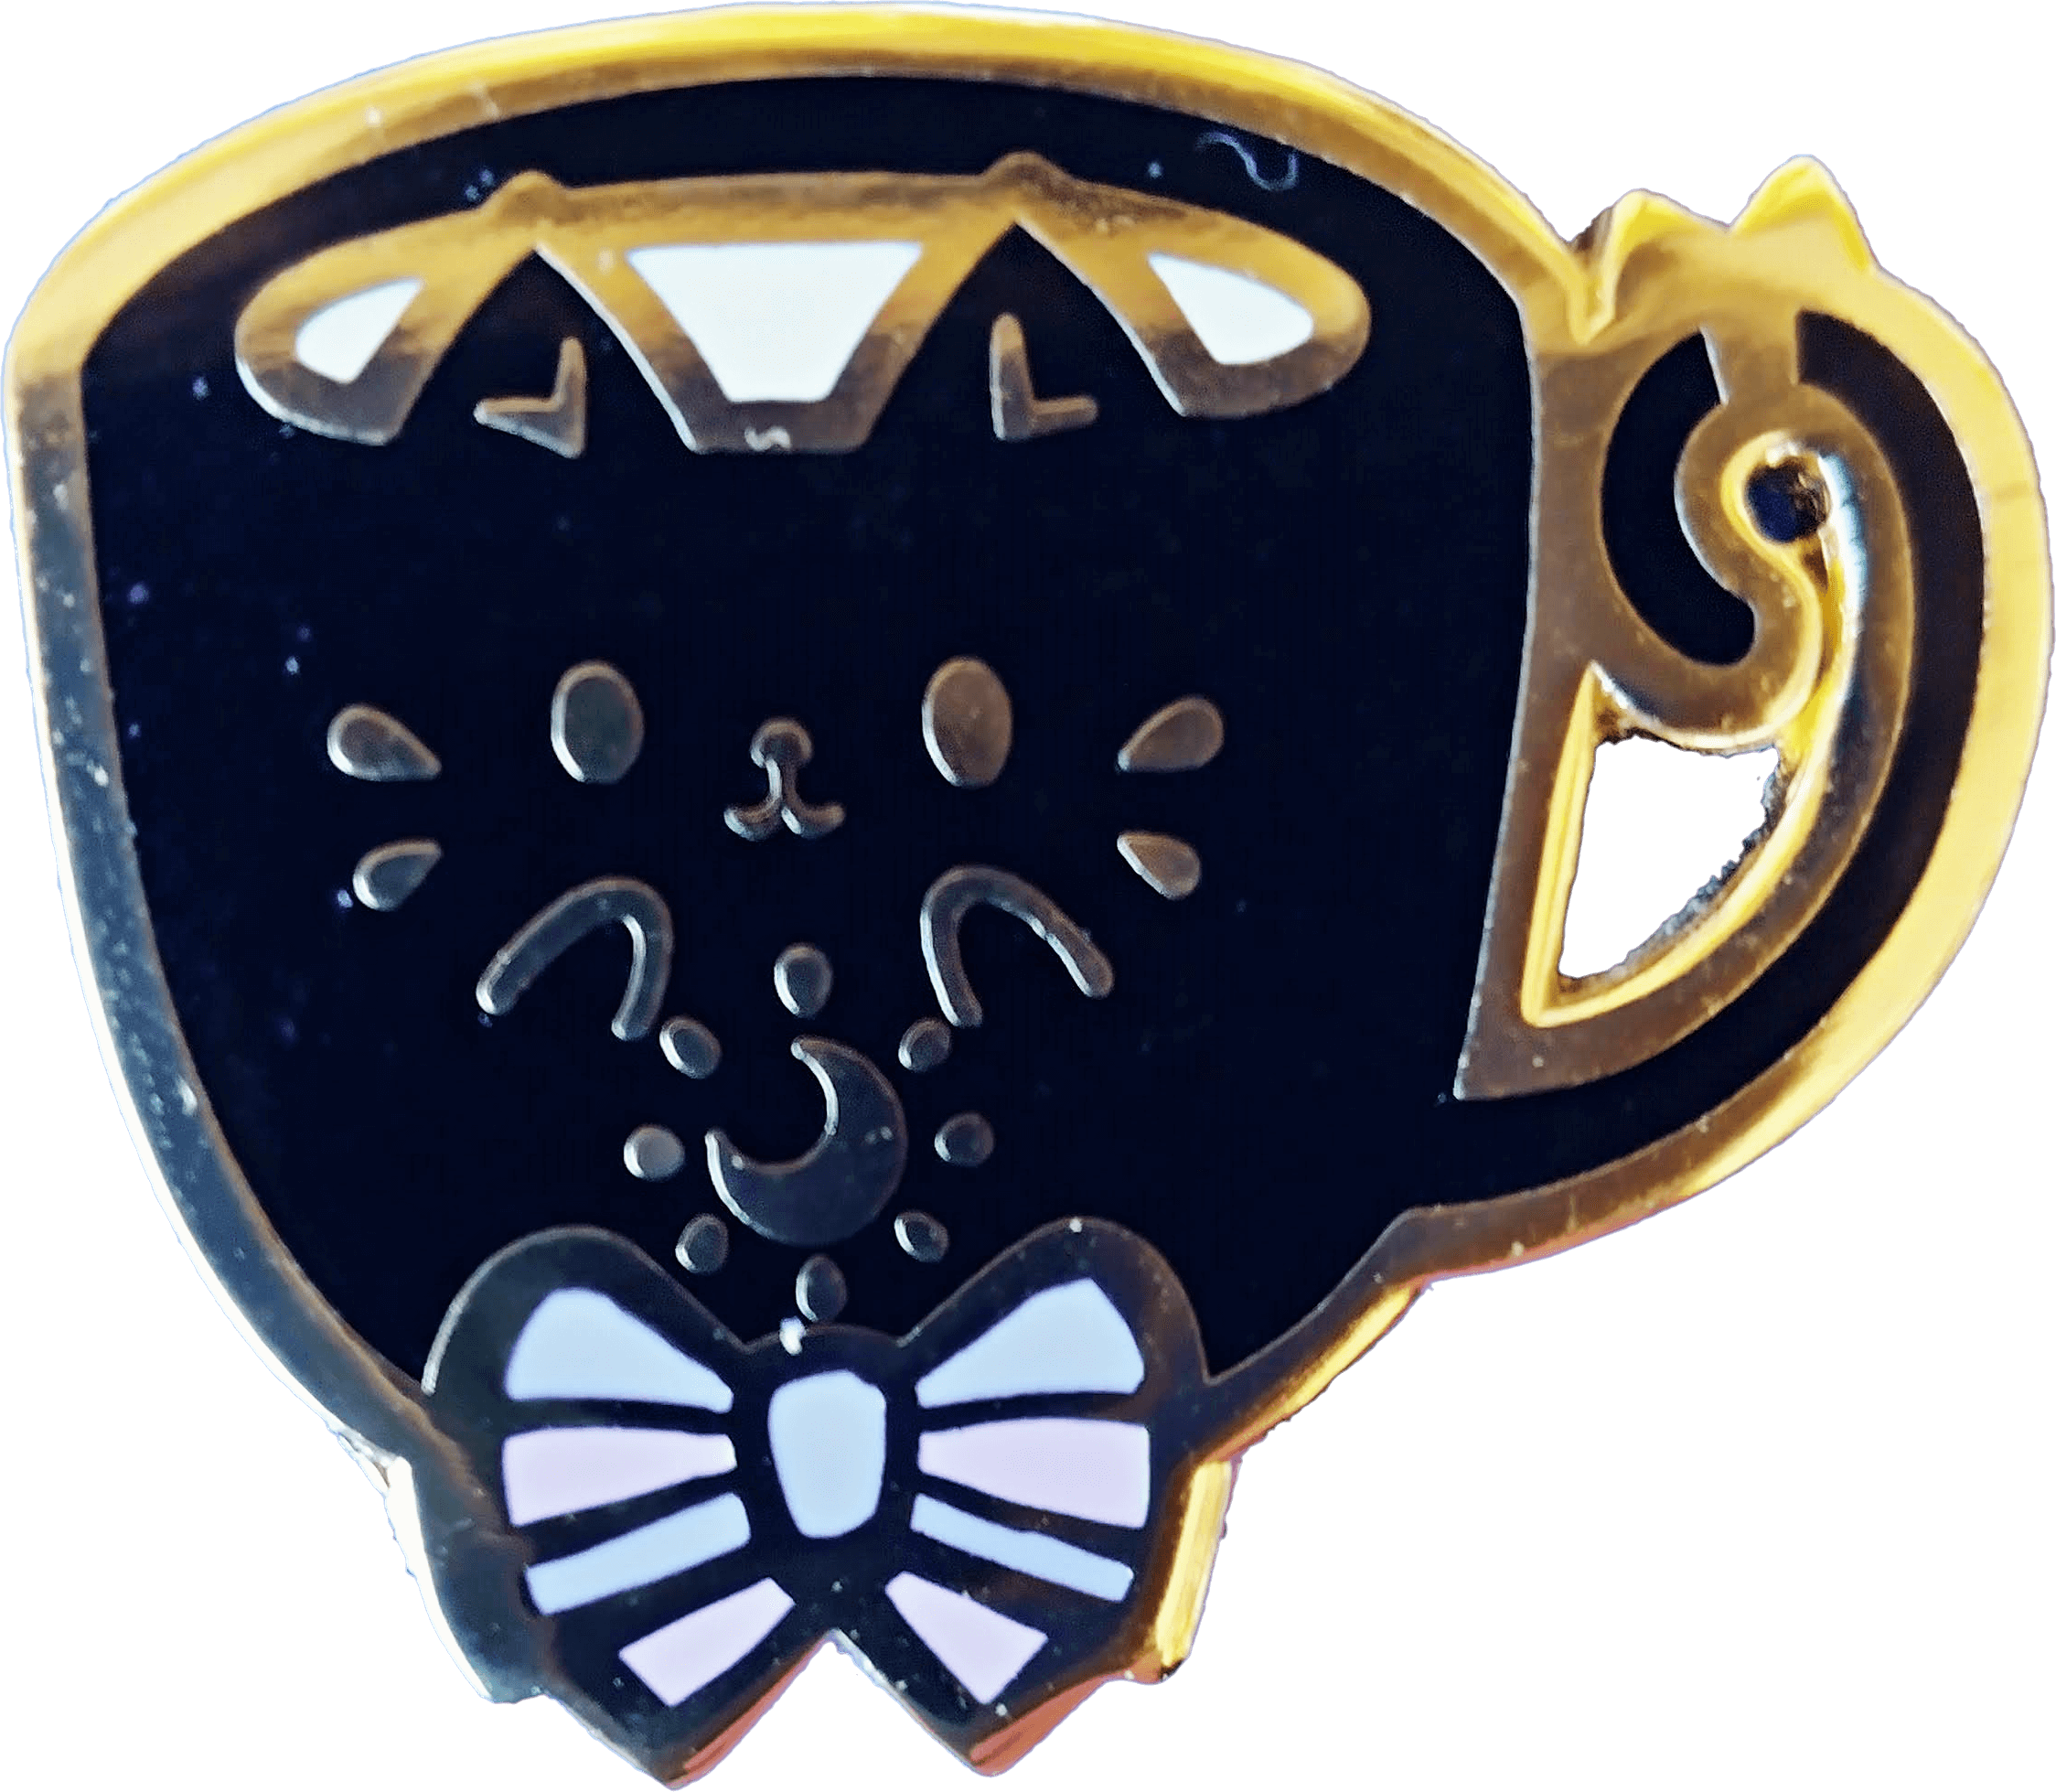 A teacup with a cat's face